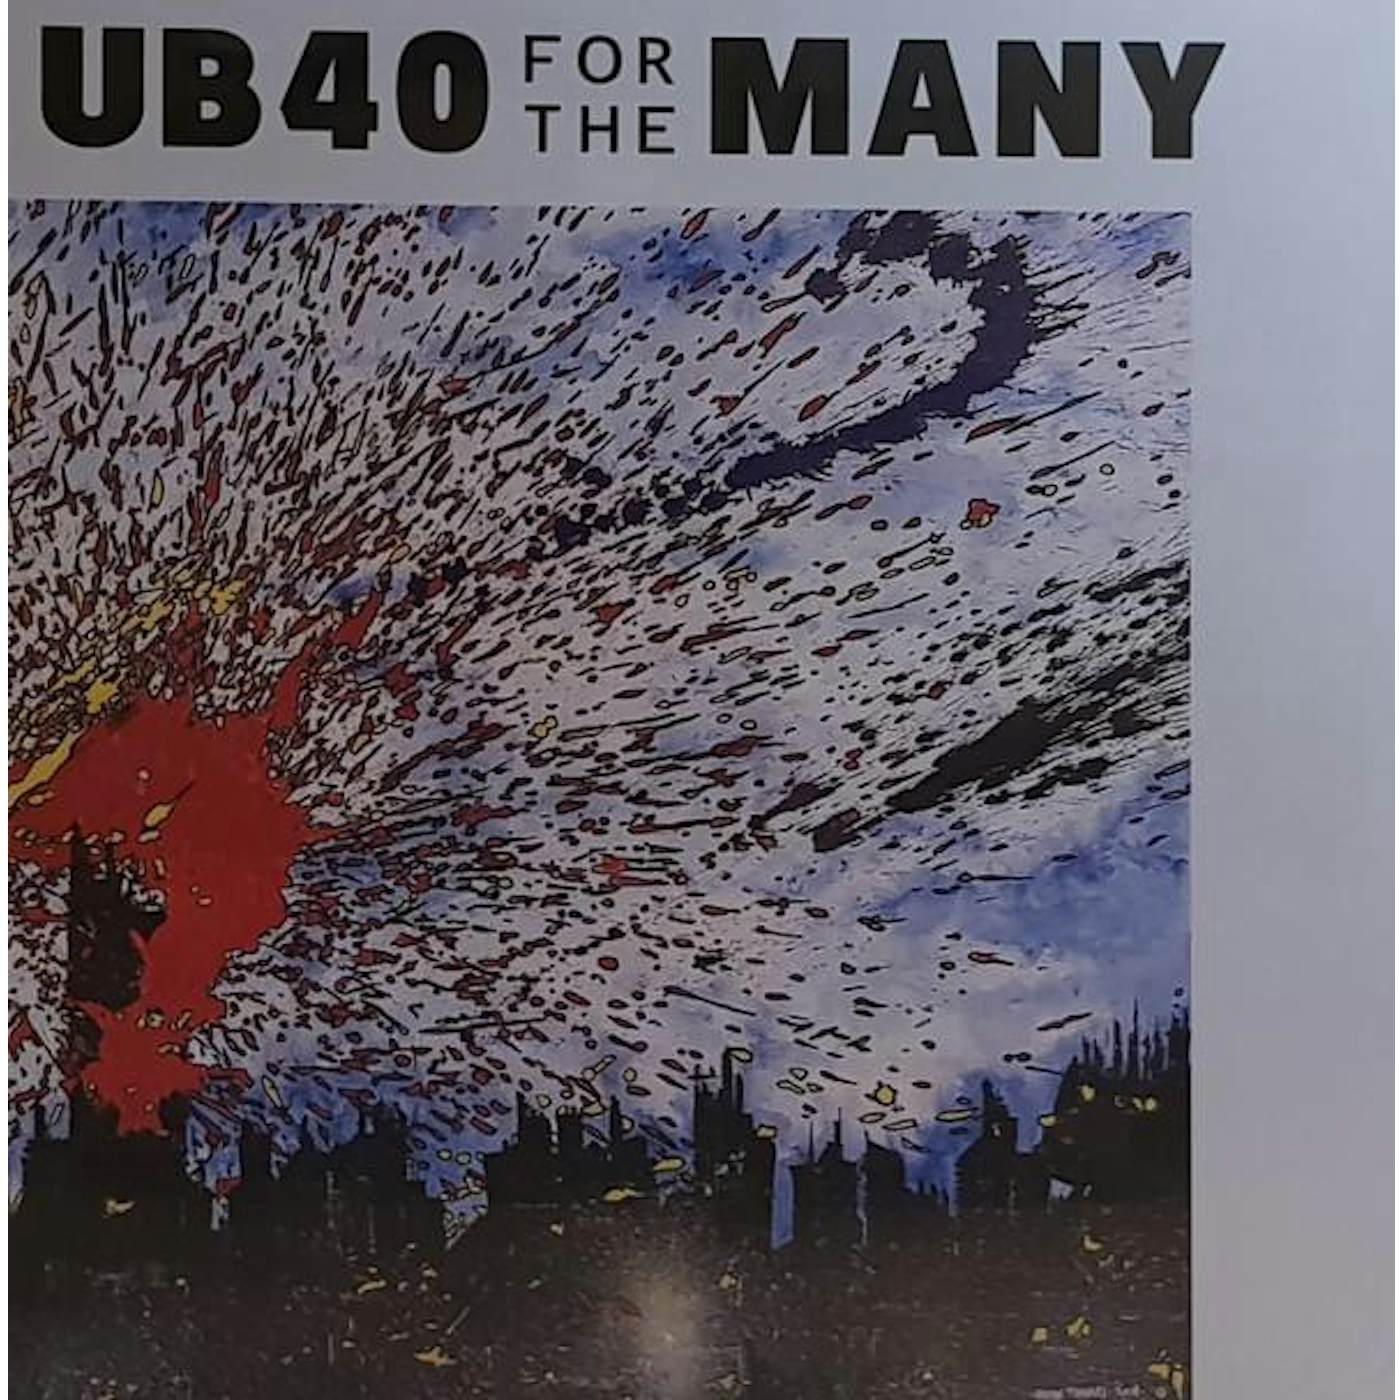 UB40 FOR THE MANY Vinyl Record